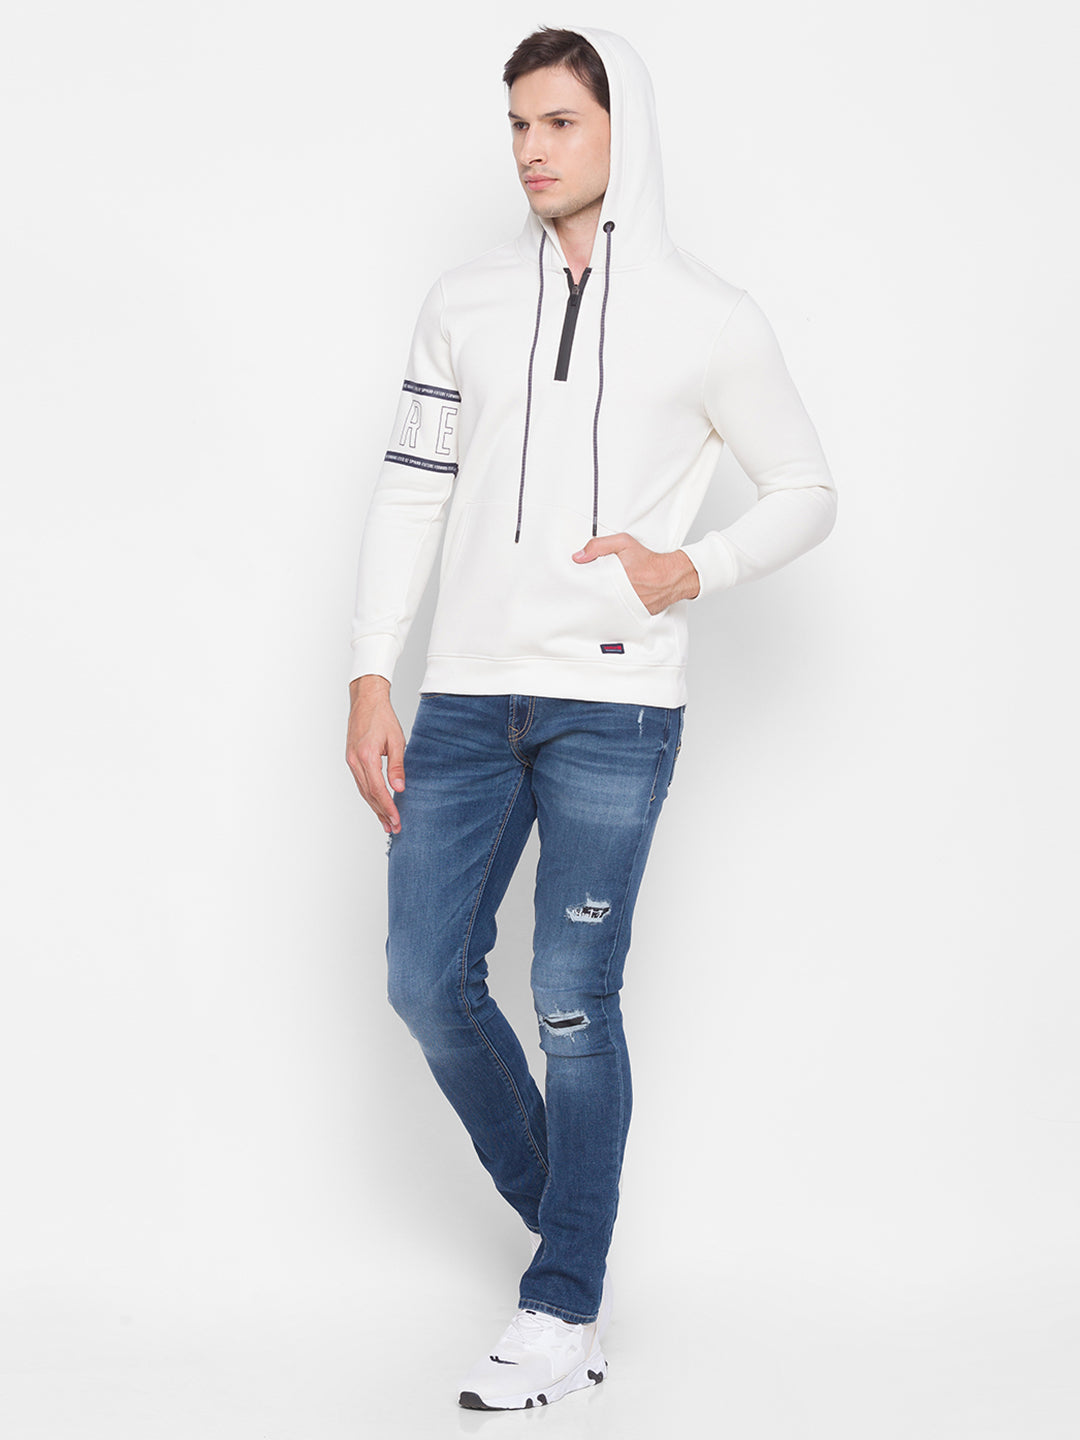 Spykar White Cotton Sweatshirt For Men